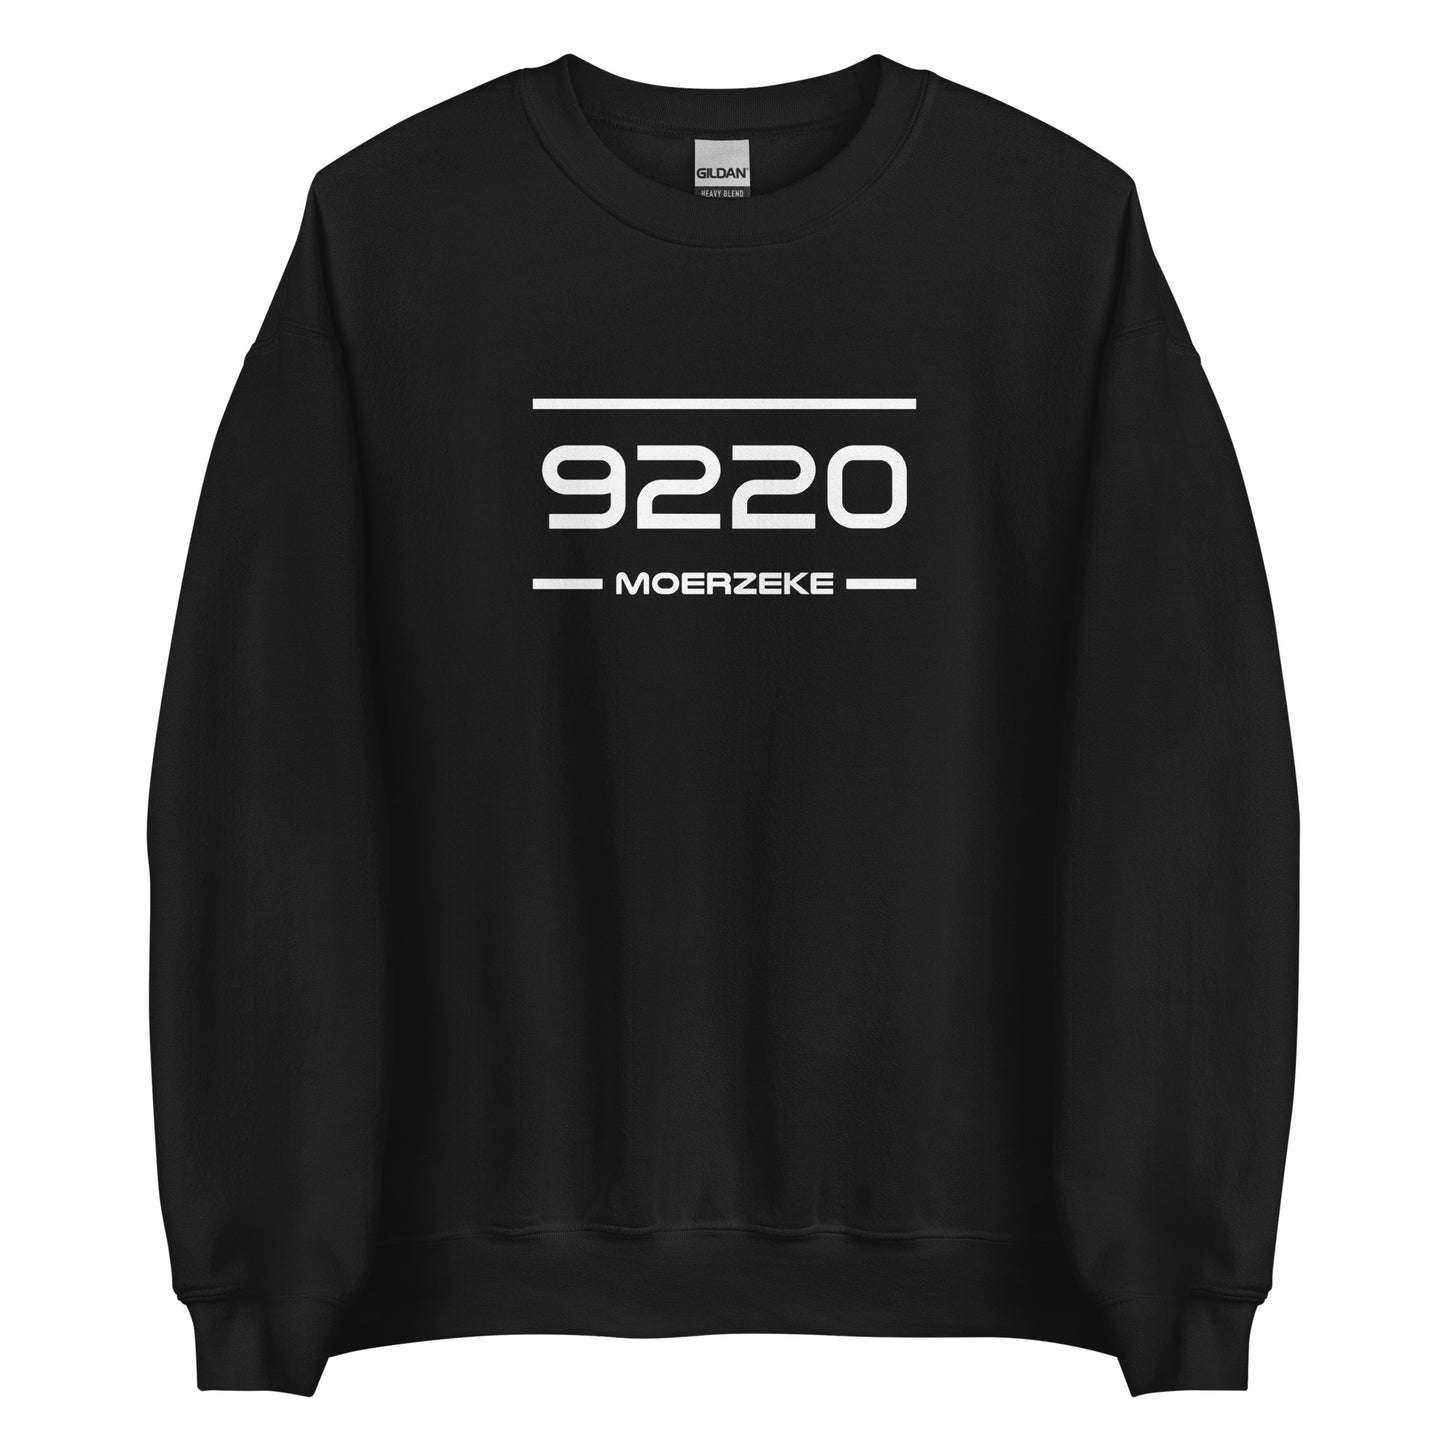 Sweater - 9220 - Moerzeke (M/V)